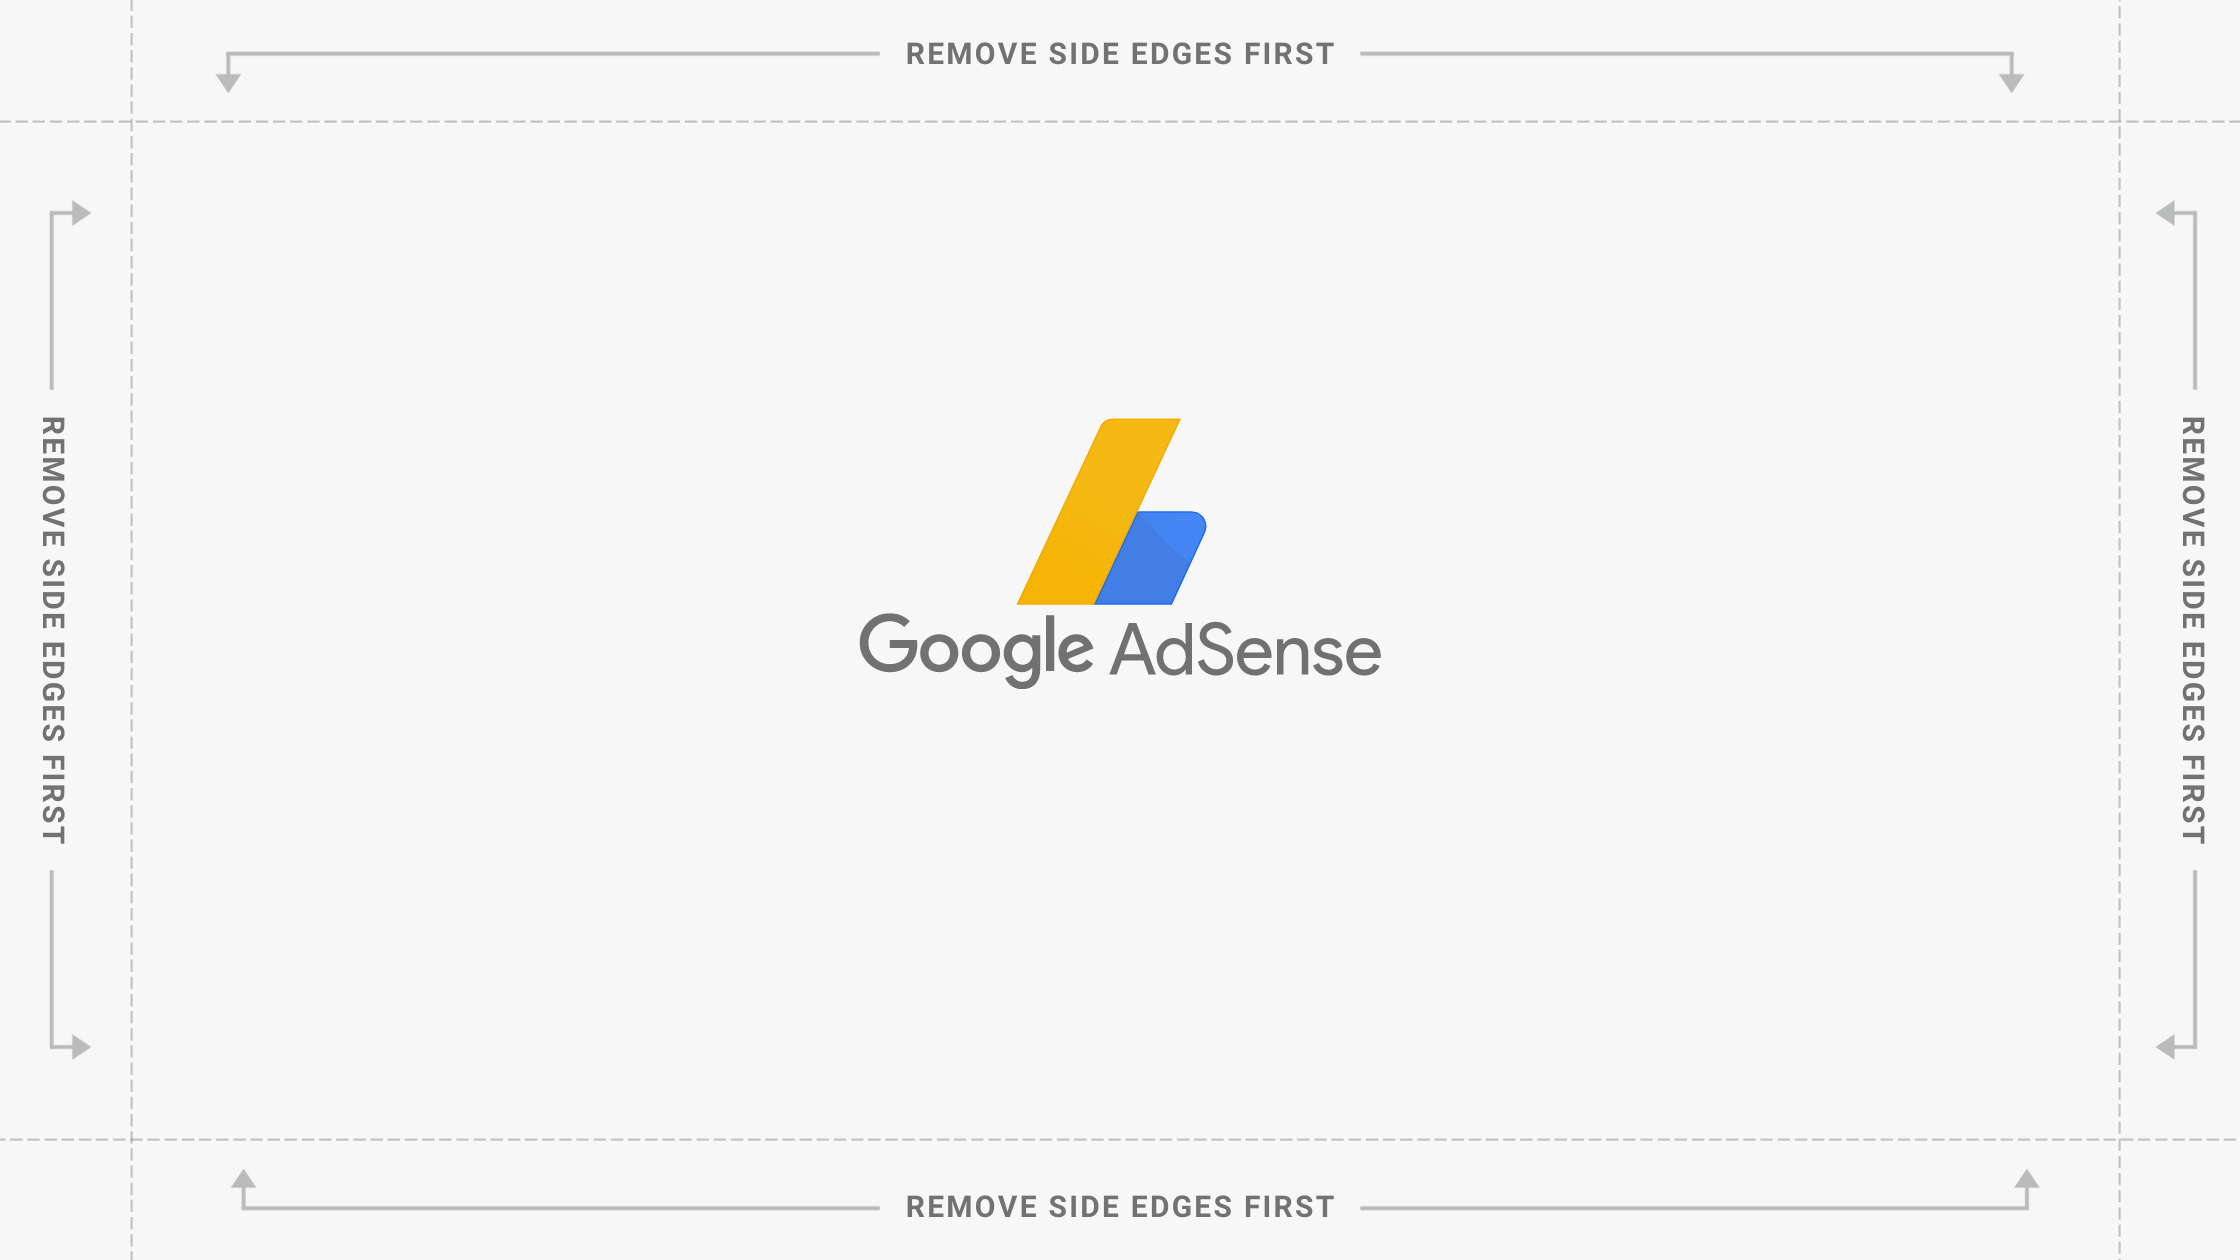 Google adsense